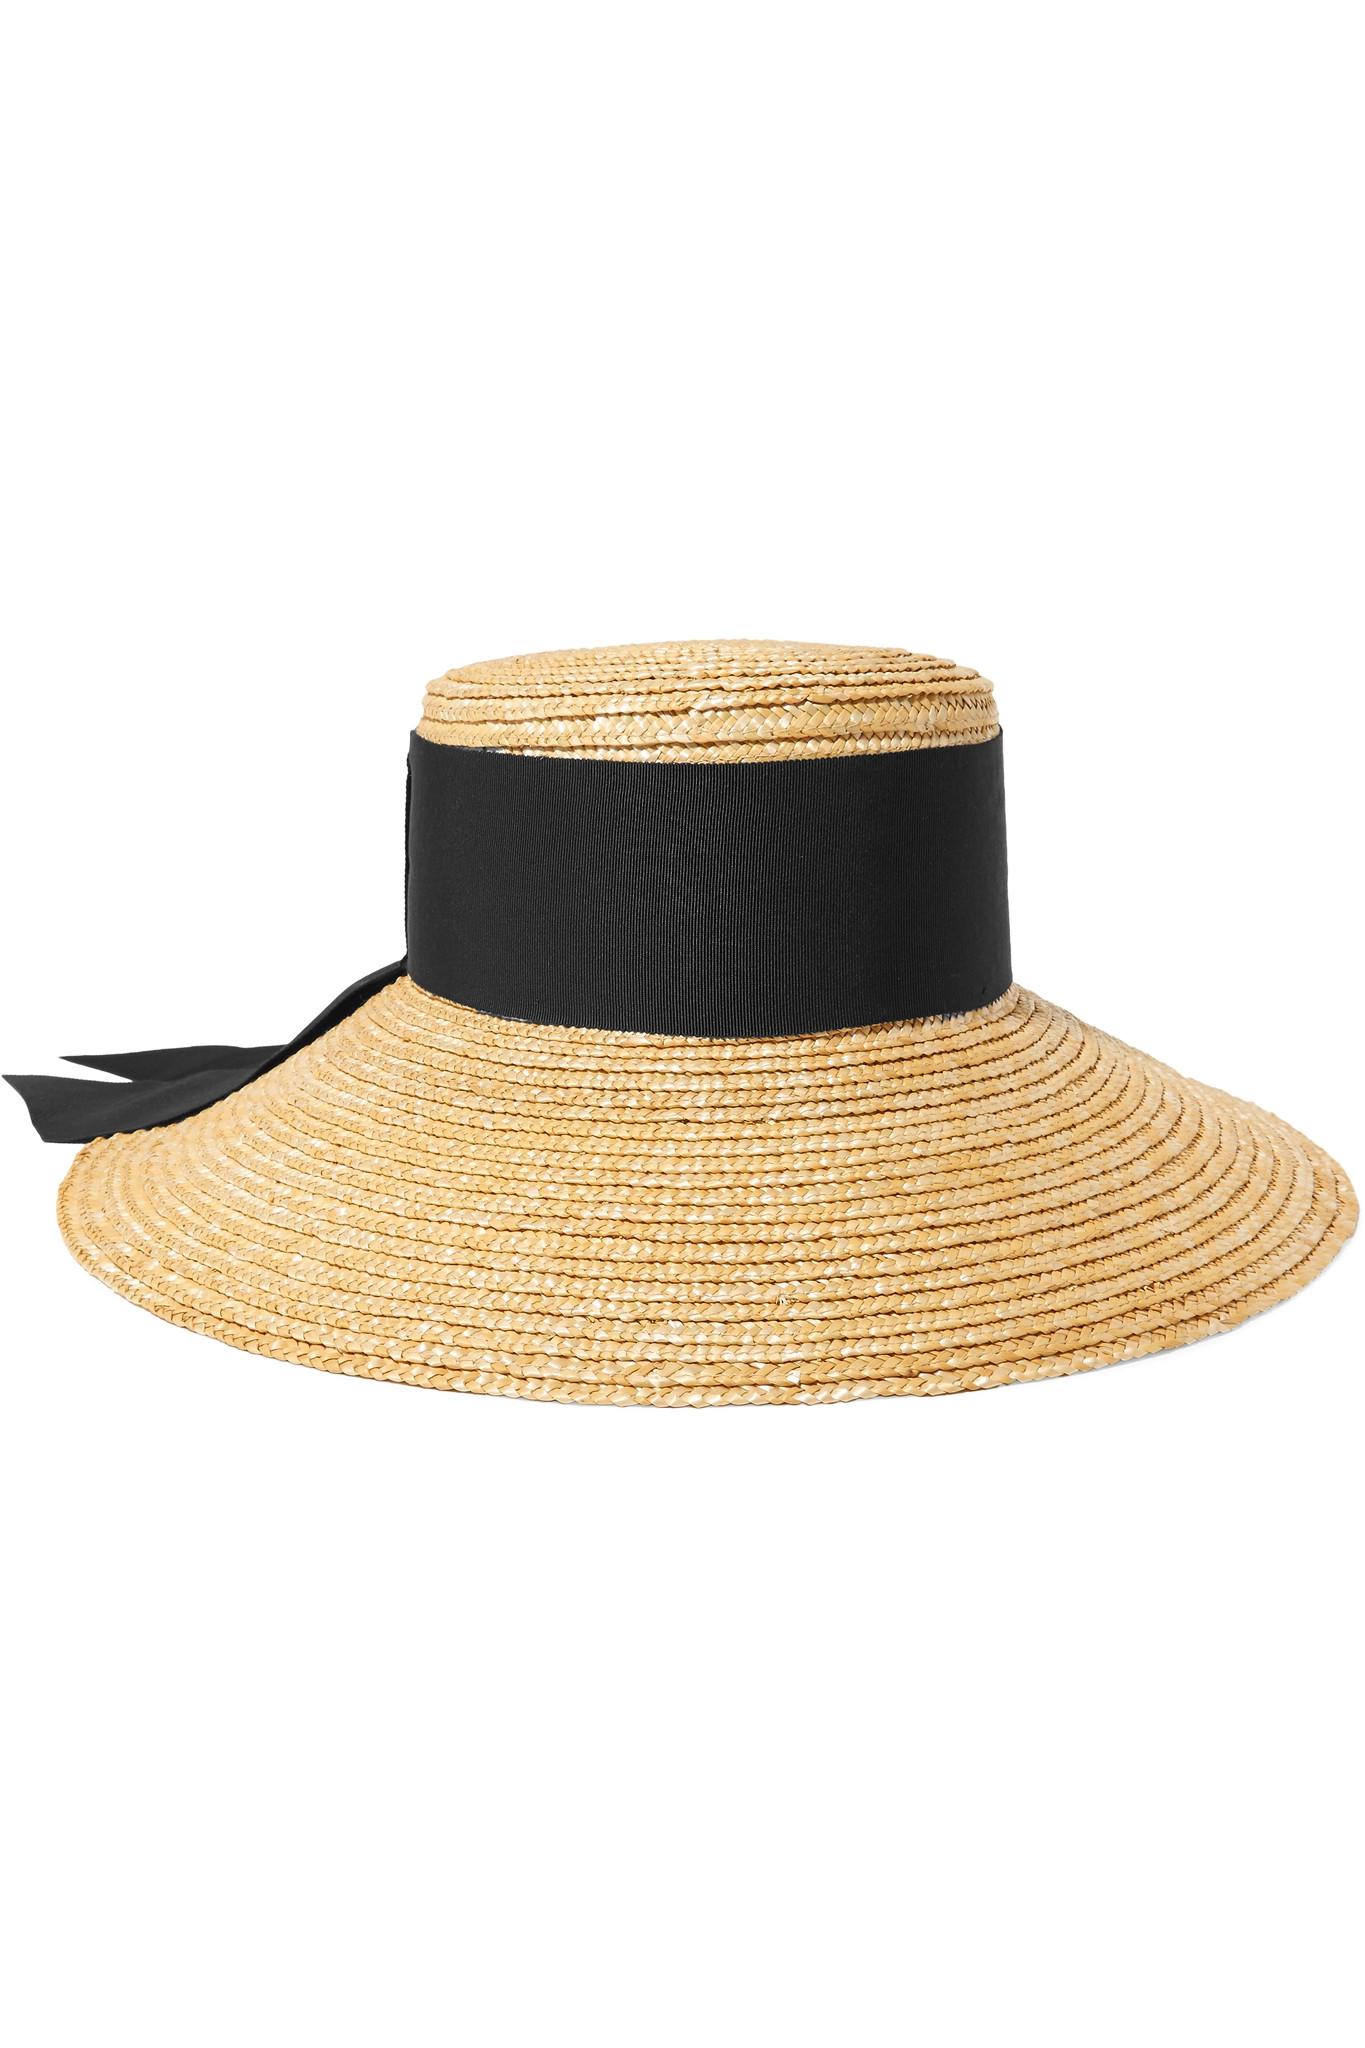 Eugenia Kim Annabelle Grosgrain-trimmed Straw Hat in Beige (Natural) - Lyst